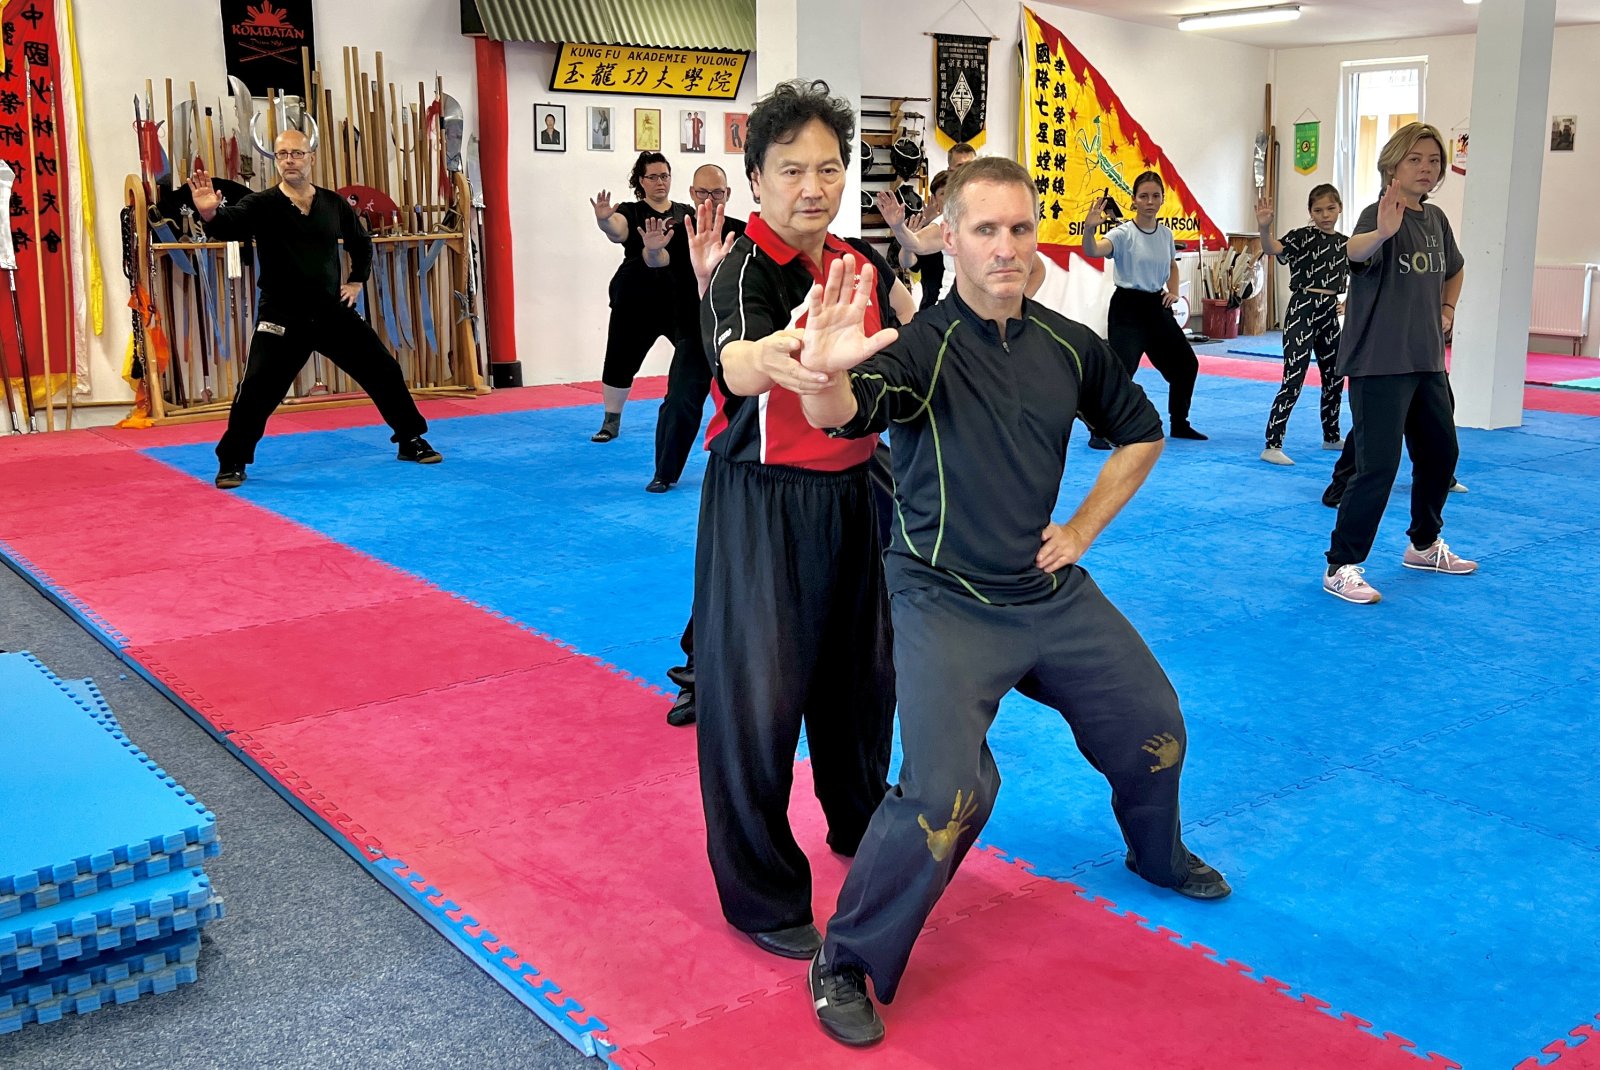 Chen Taiji Quan workshop with master Chen Shi Hong in Brno